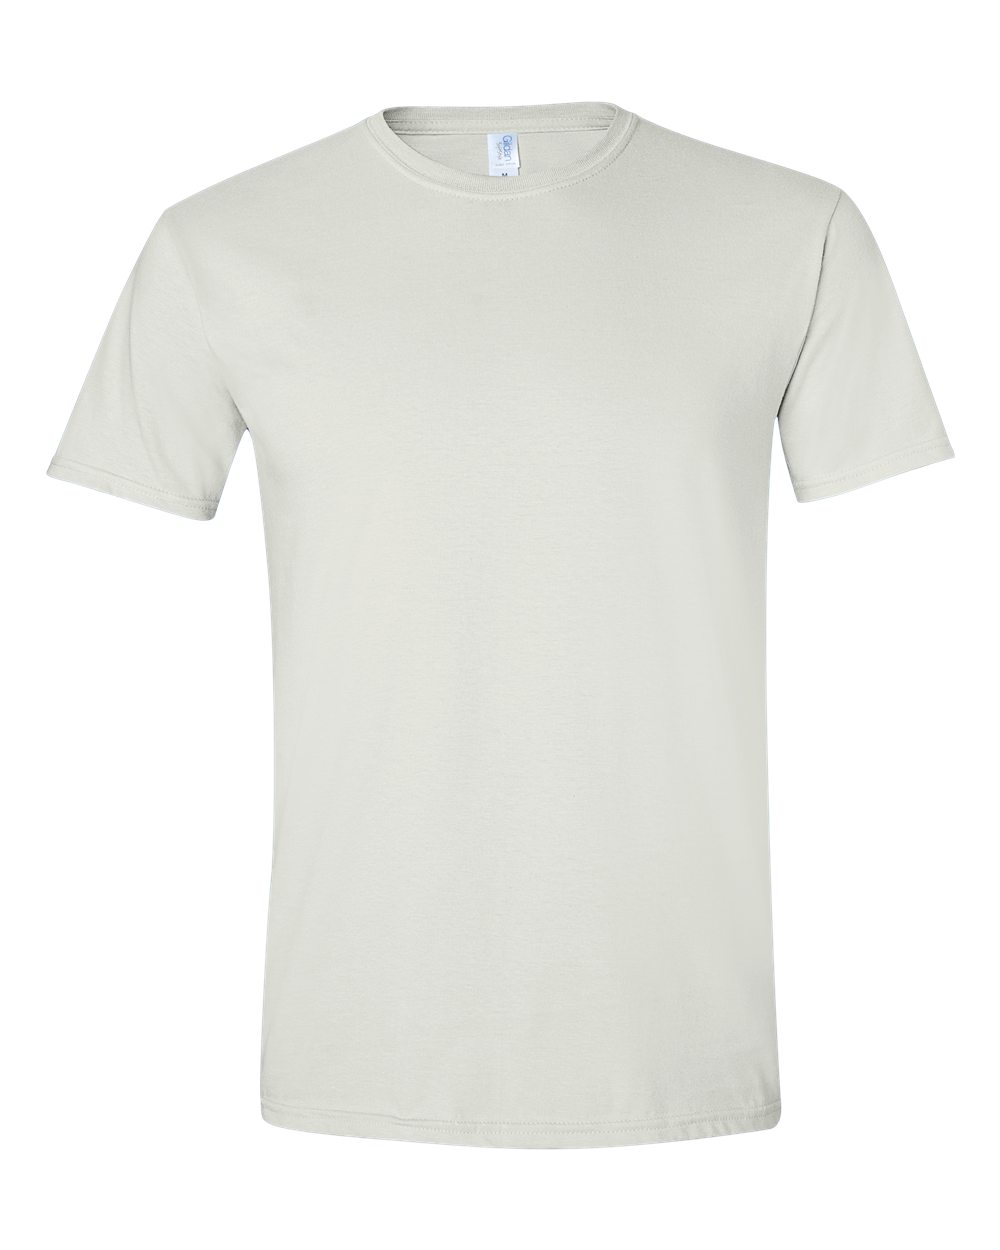 Pretreated Gildan 64000 Softstyle T-Shirt - White